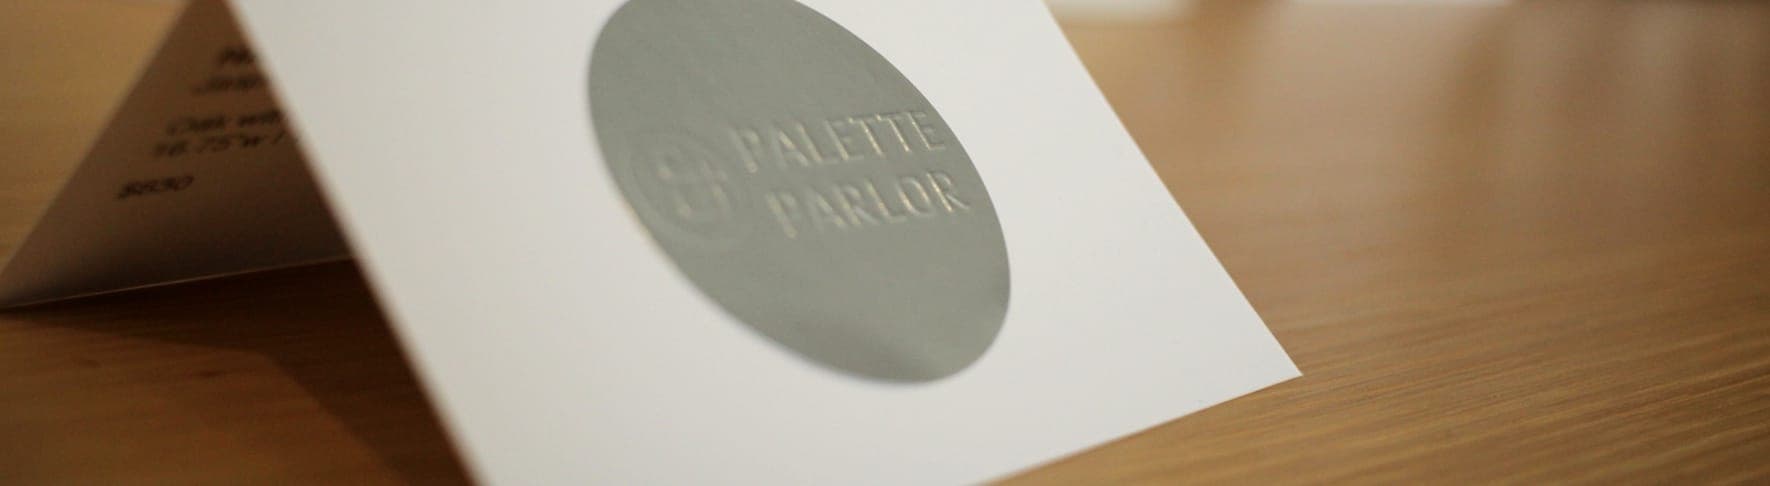 Print design of the Palette & Parlor logos